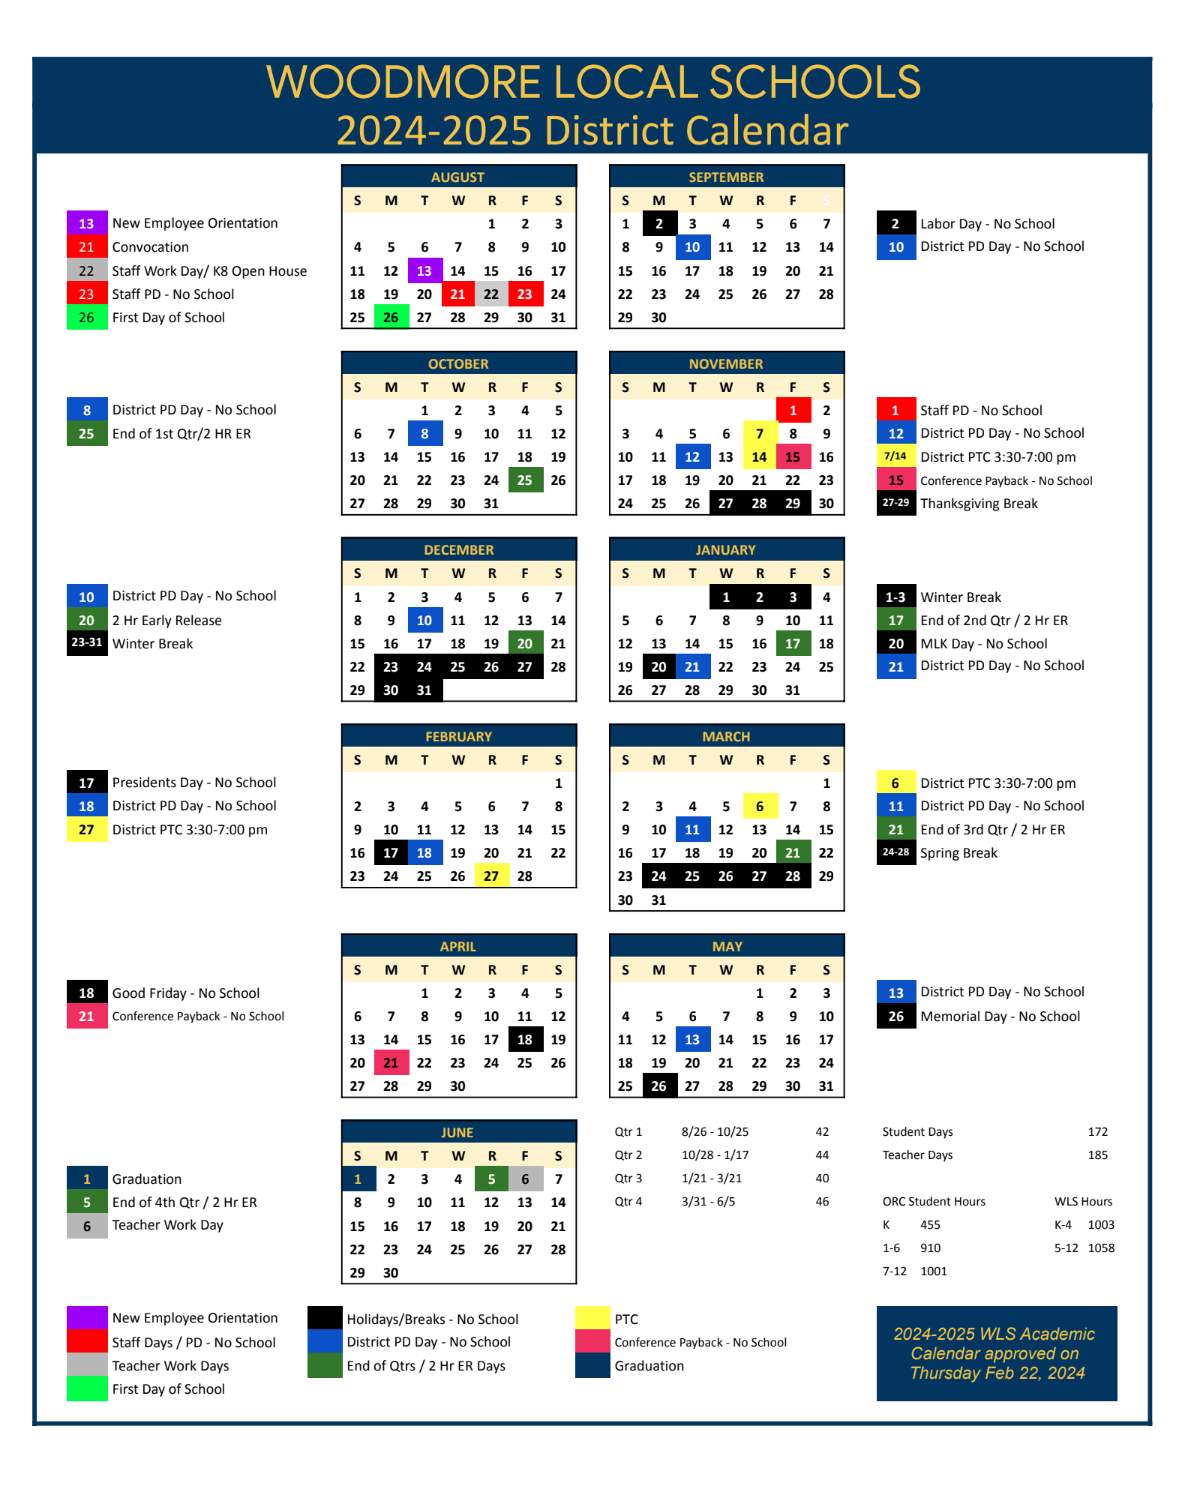 2025-2025 Updated District Calendar